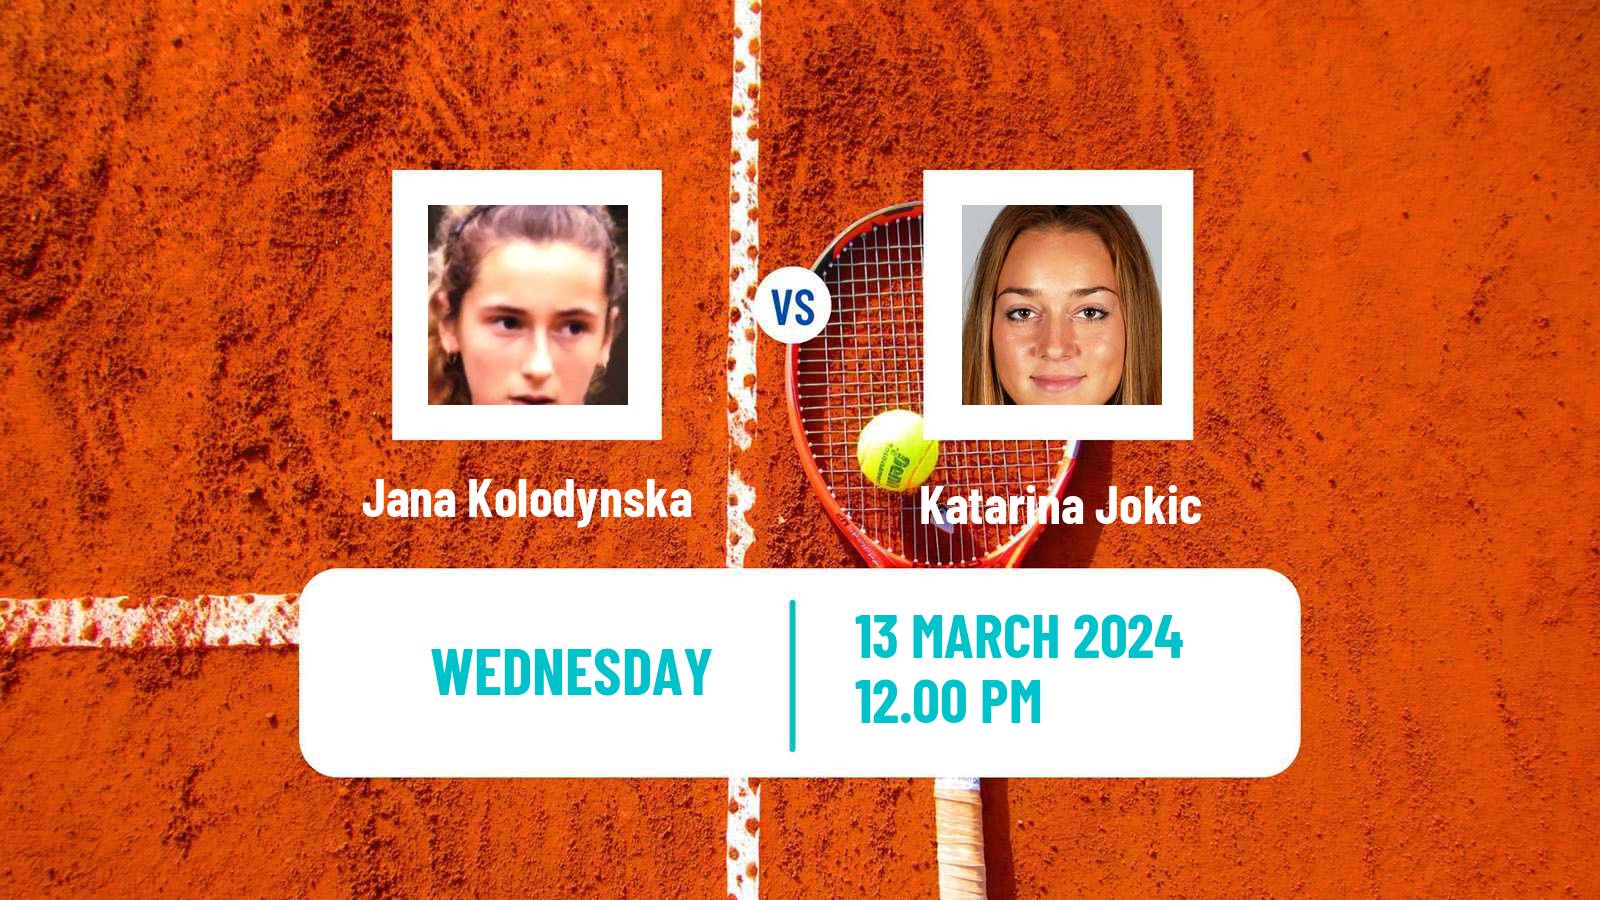 Tennis ITF W35 Santo Domingo 2 Women Jana Kolodynska - Katarina Jokic